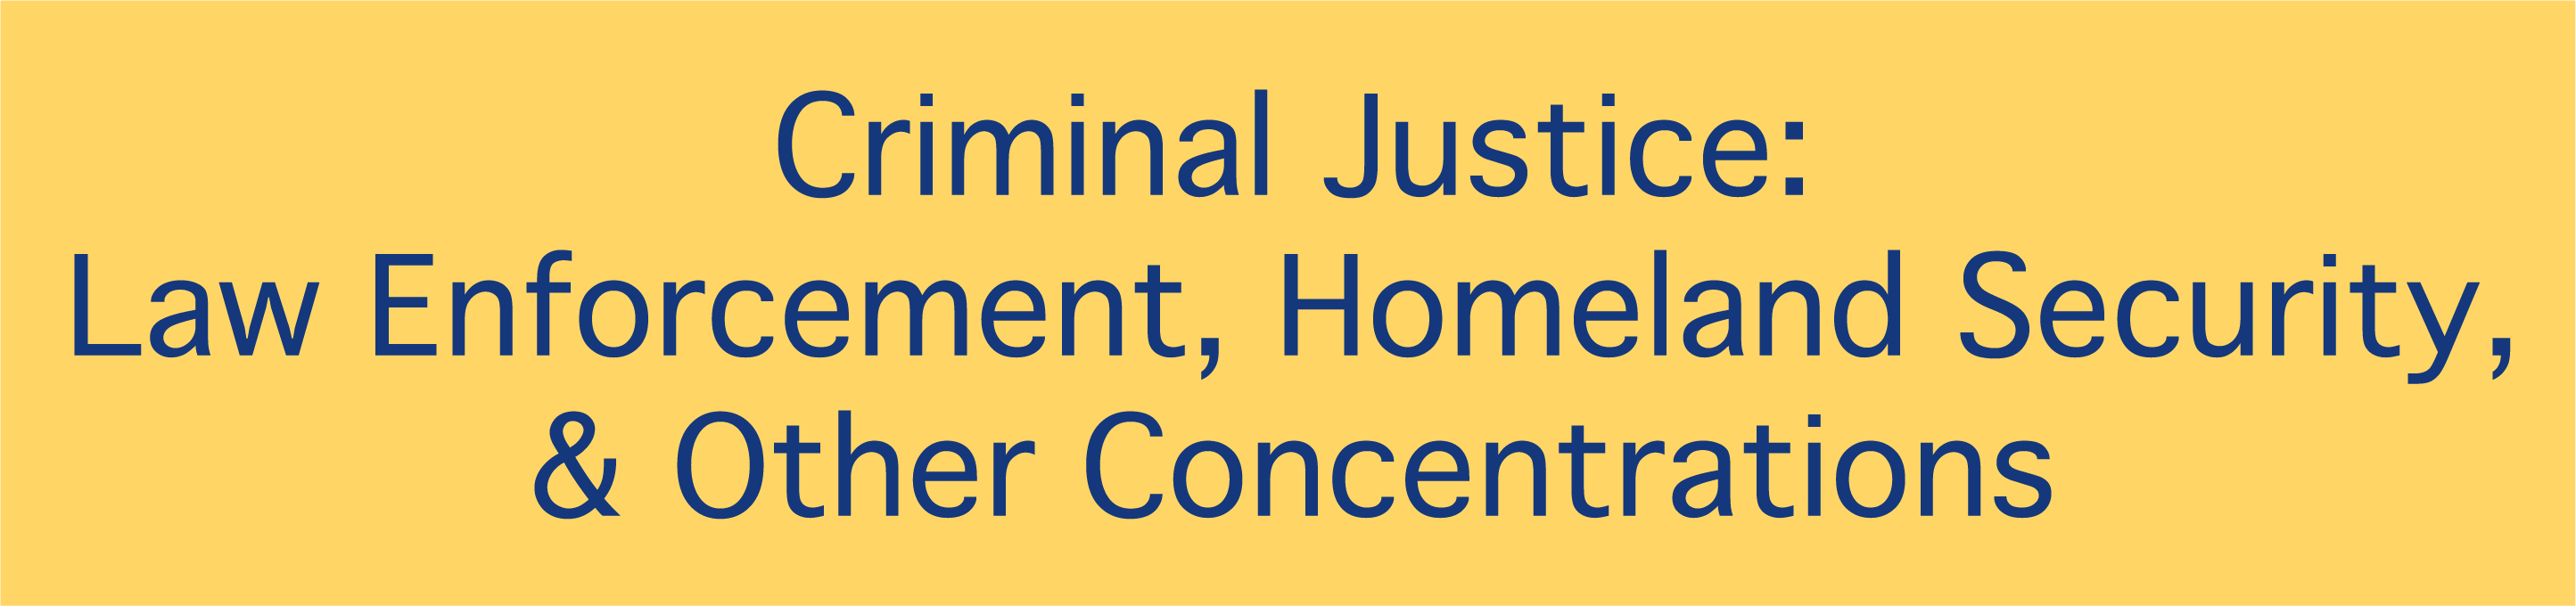 Criminal Justice: Law Enforcement, Homeland Security, & Other Concentrations